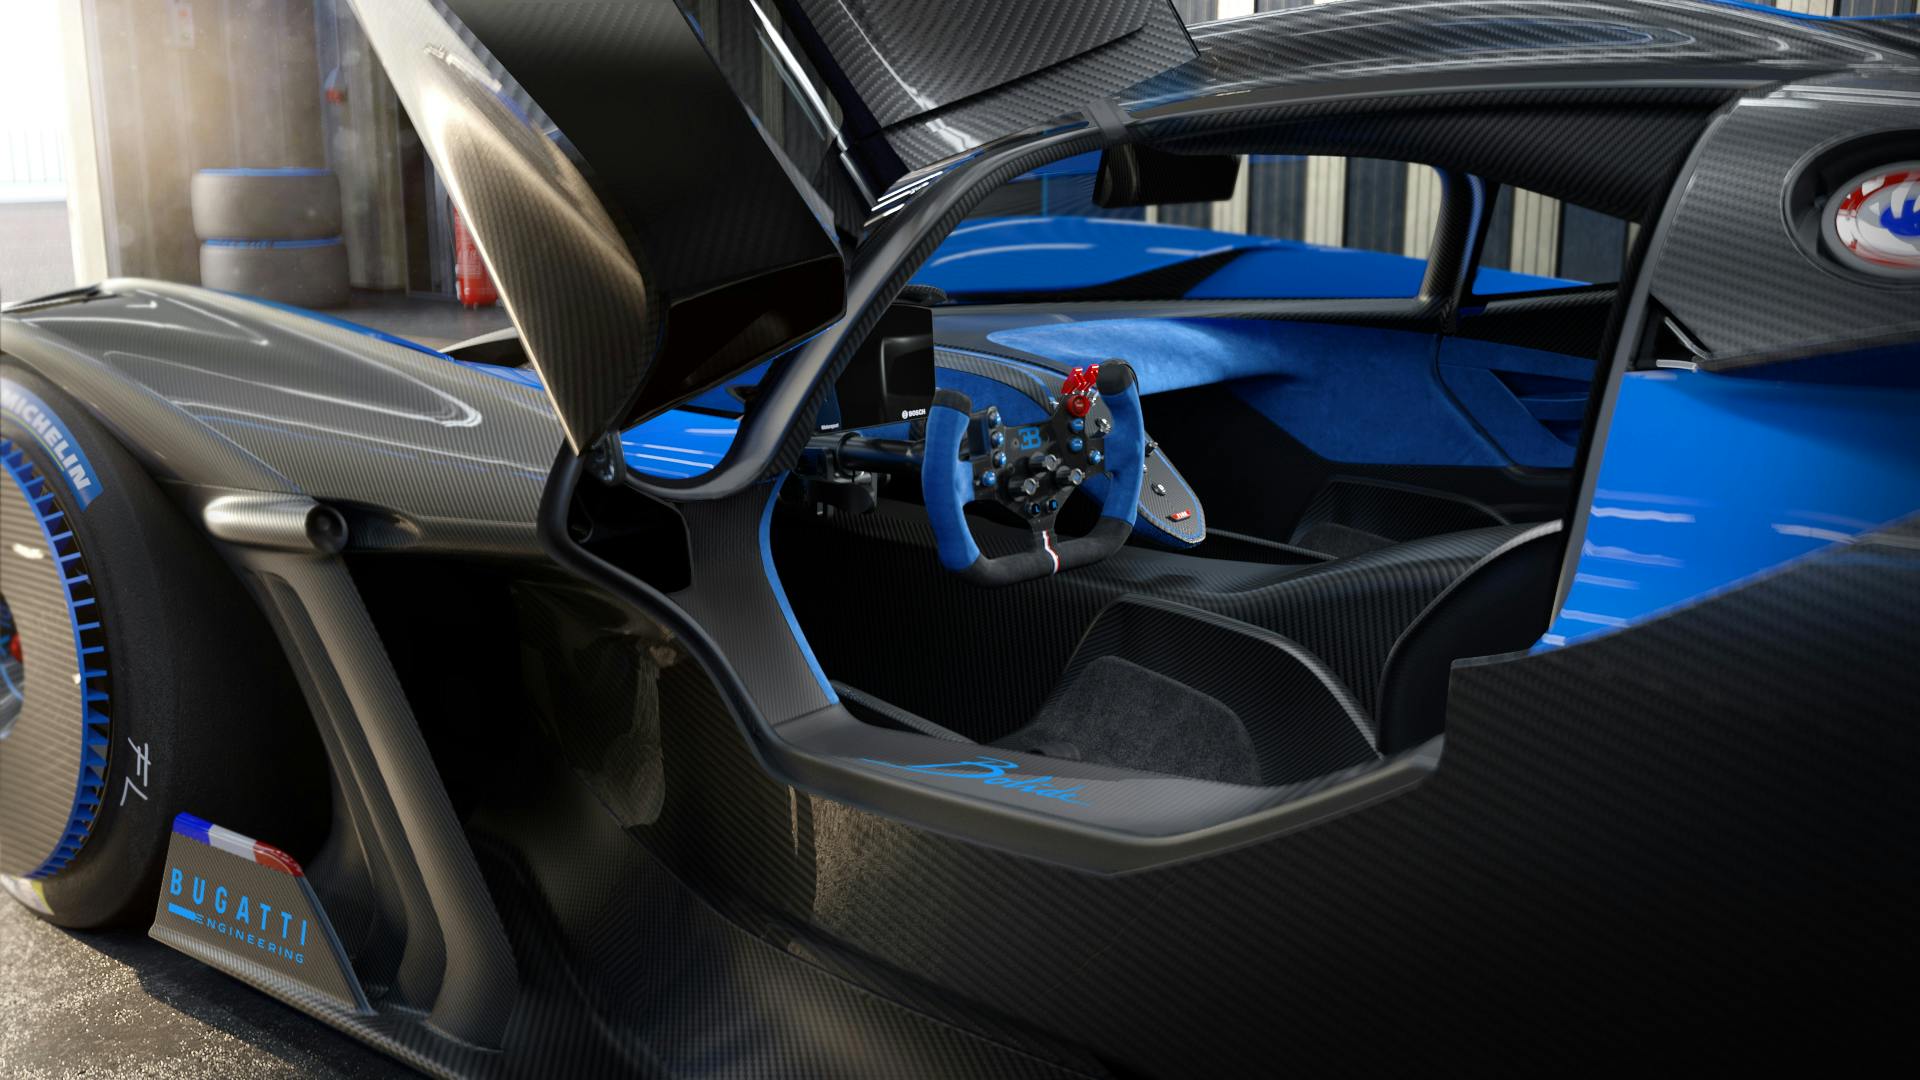 Bugatti bolide cockpit inside look